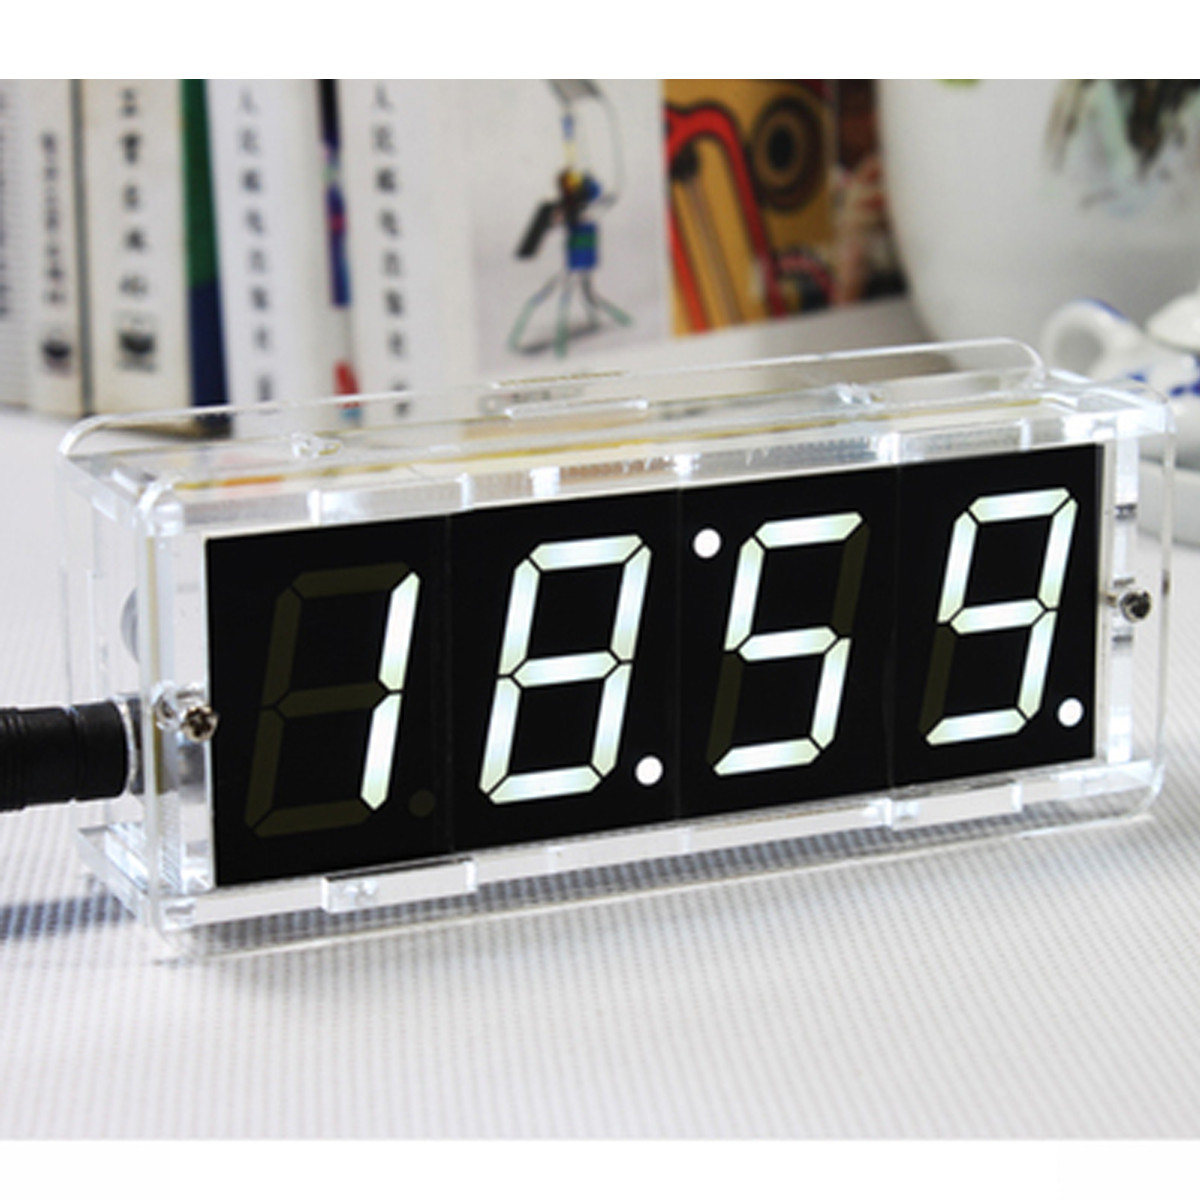 DIY Digital Clock Kit
 DIY Digital LED Electronic Microcontroller Clock Kit